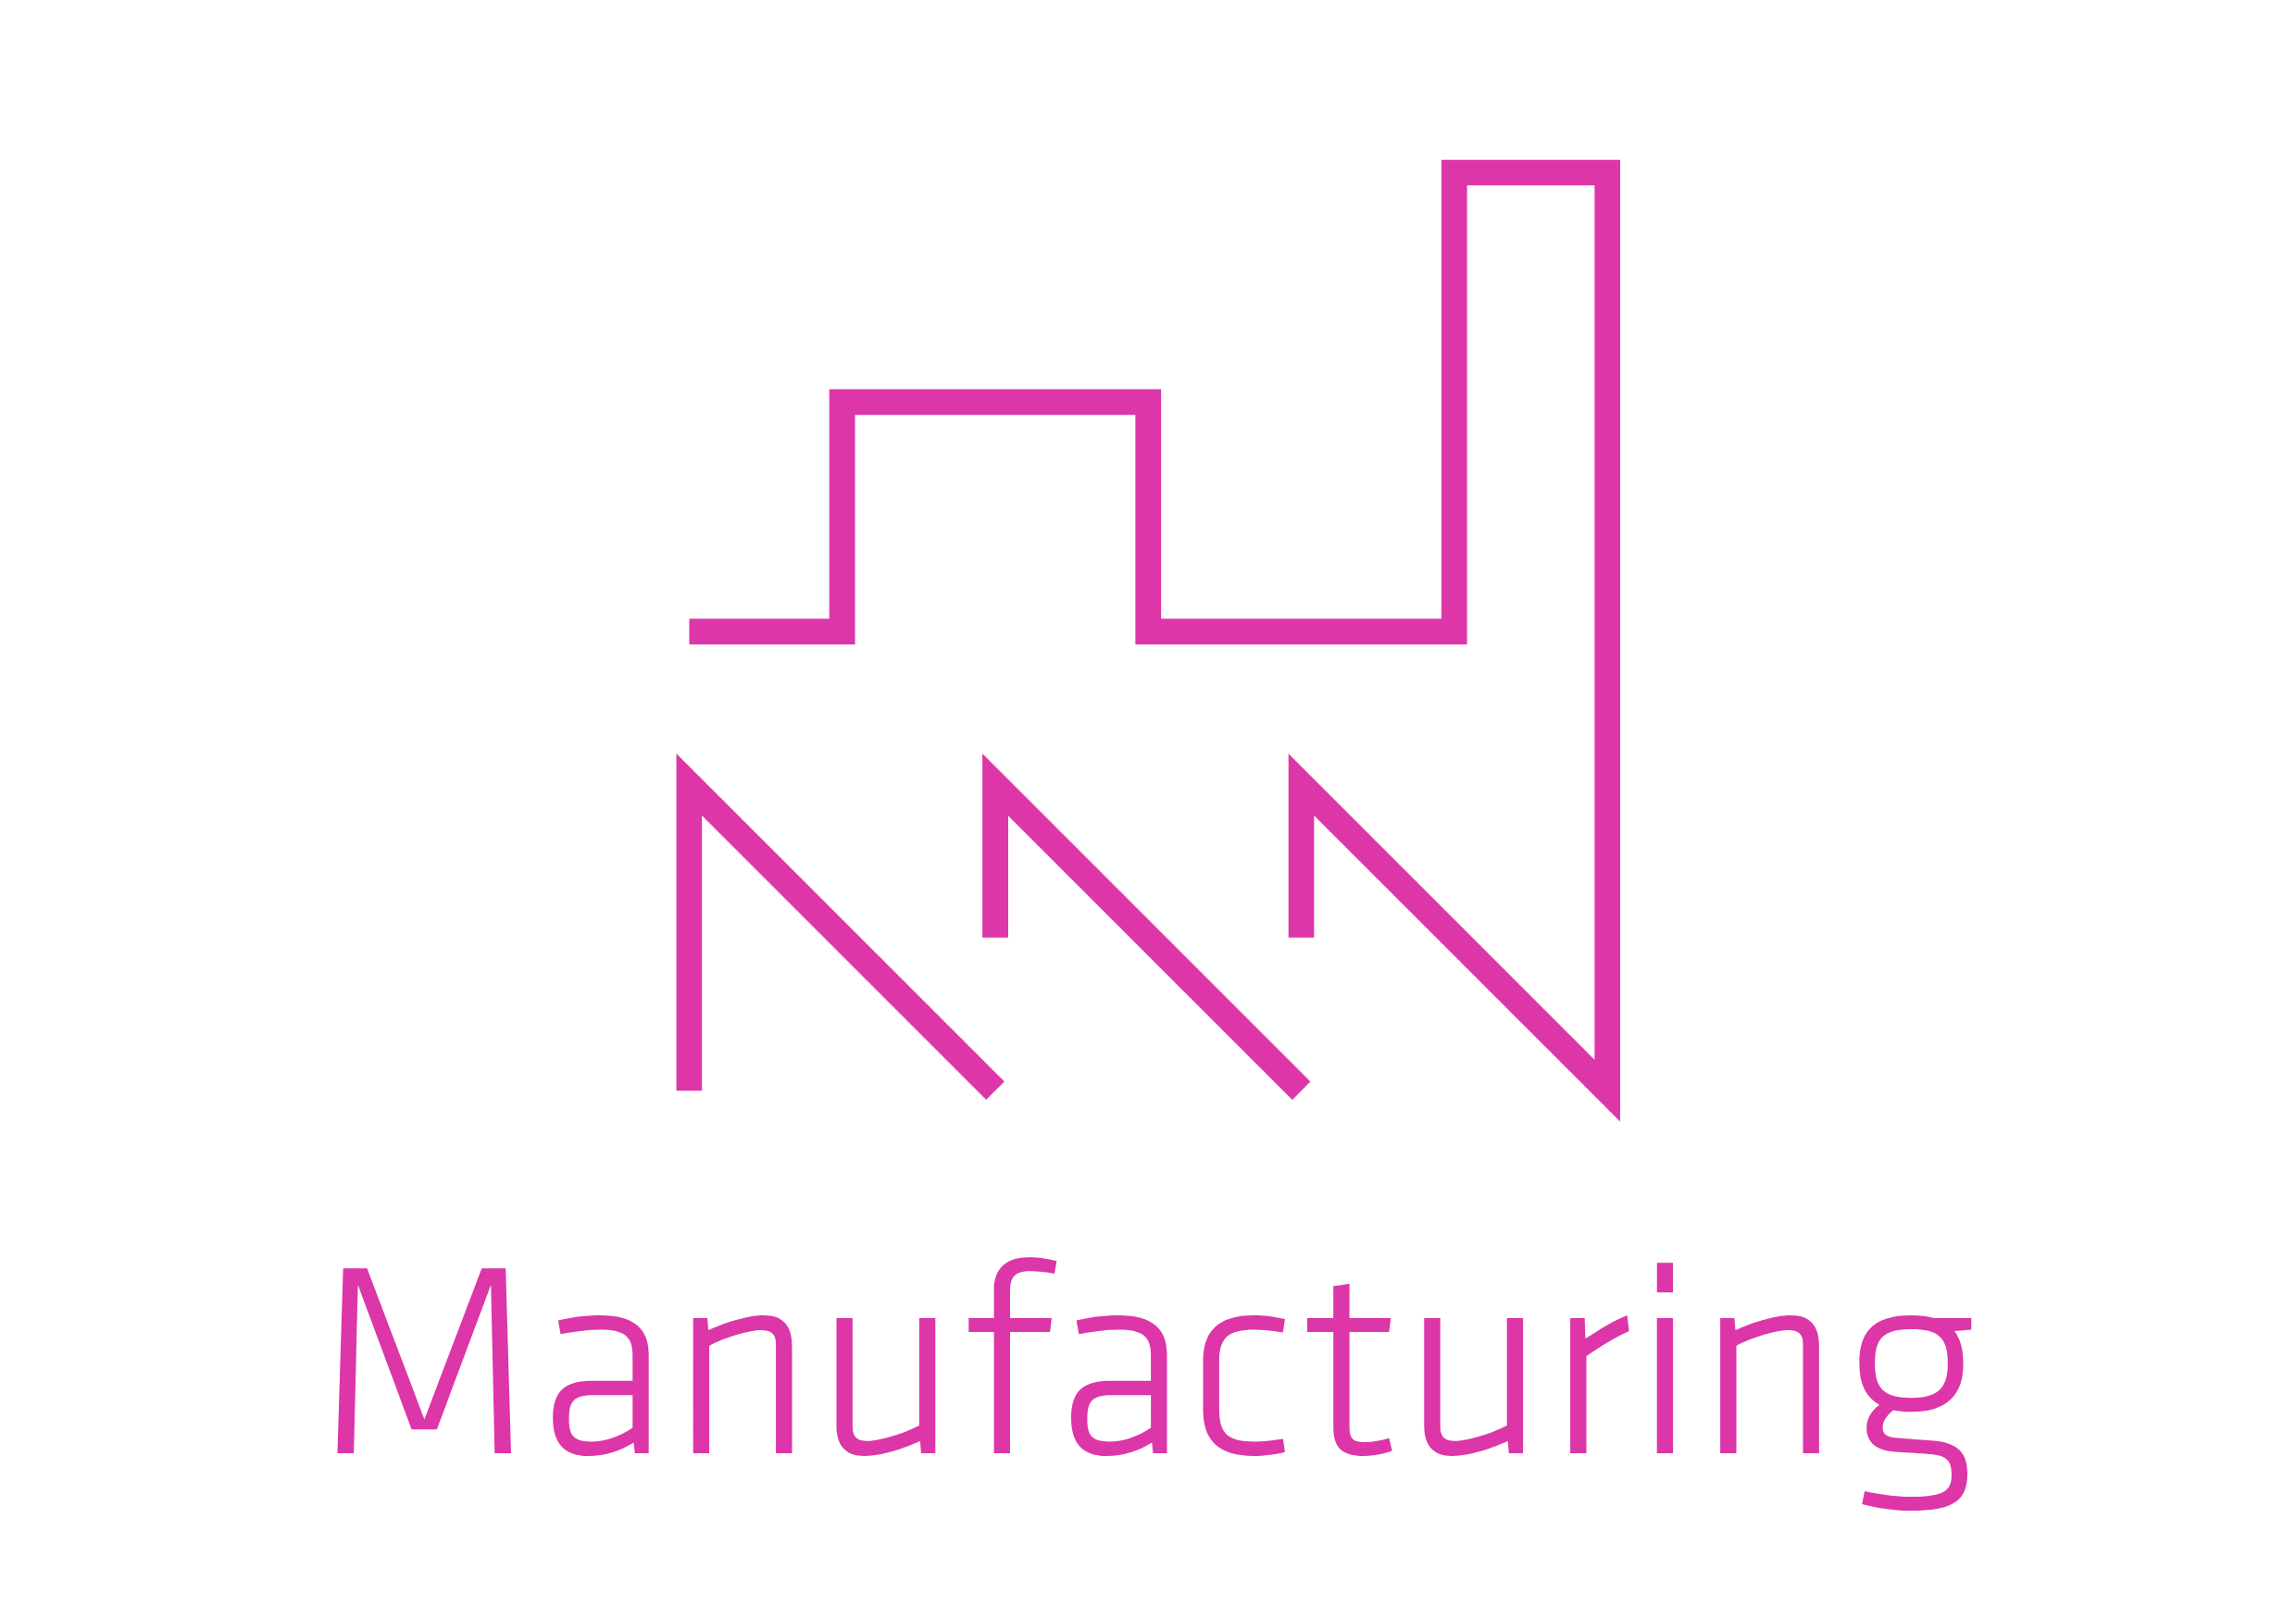 manufacturing